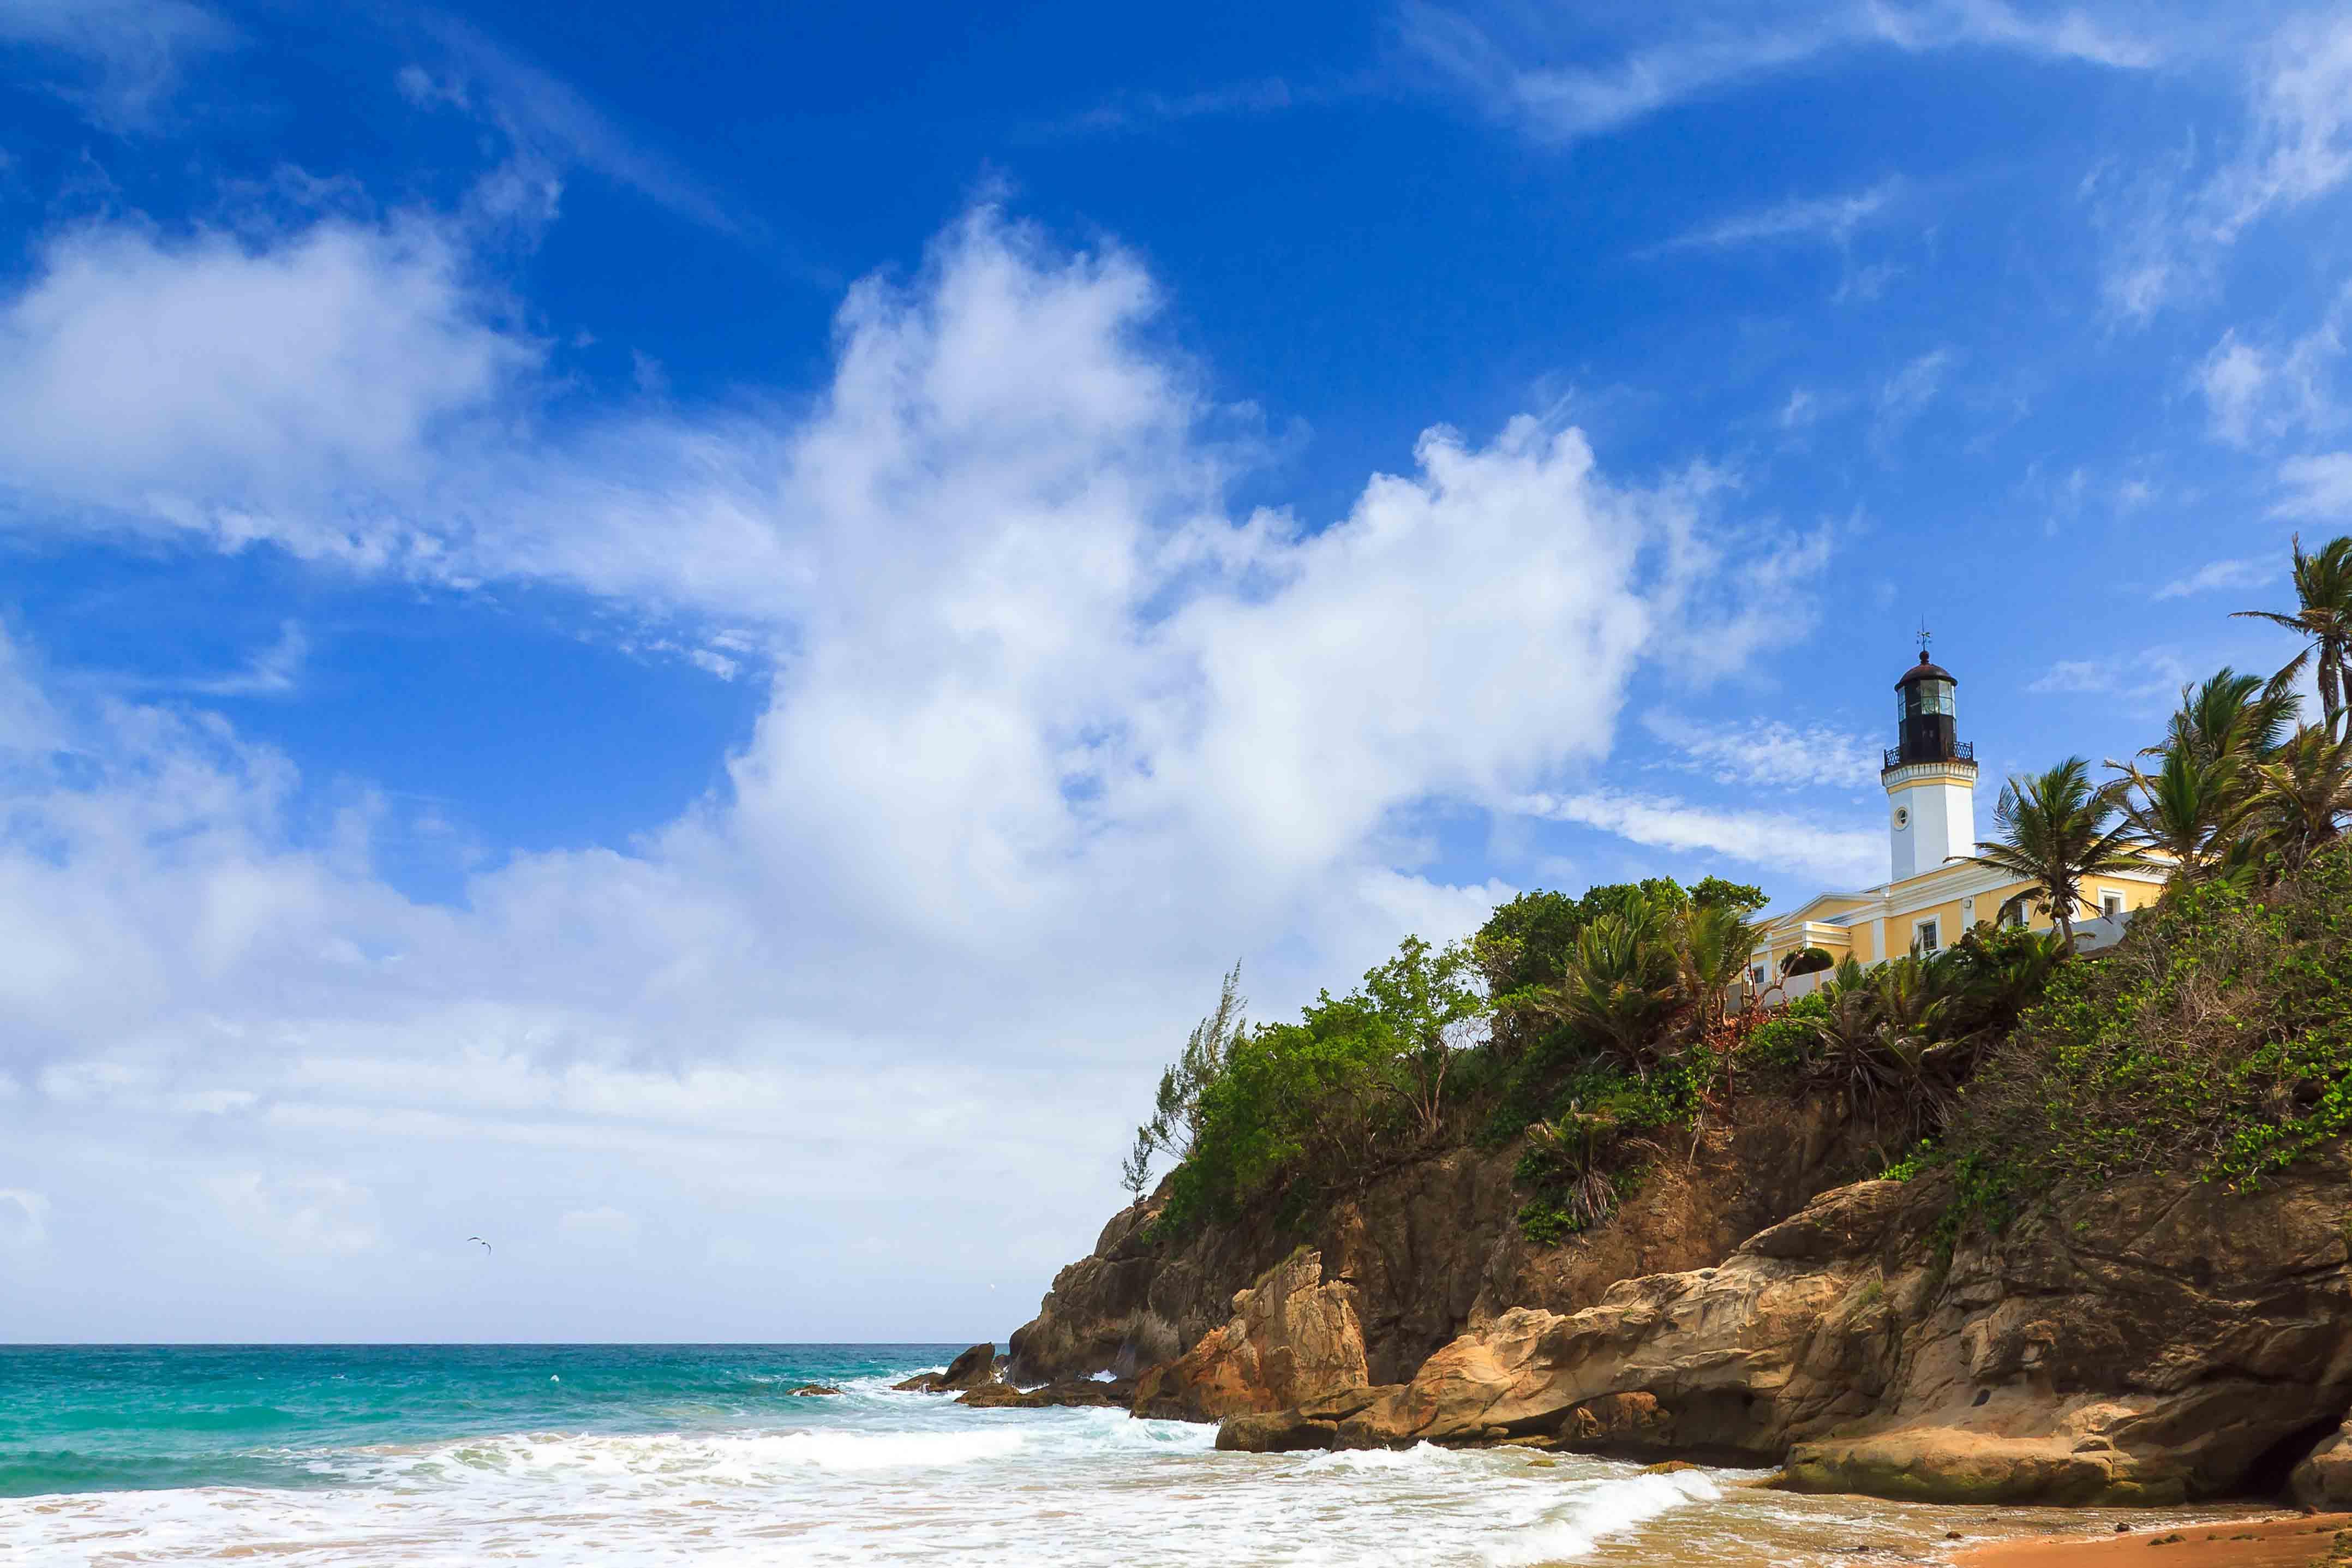 The breathtaking sights of Puerto Rico